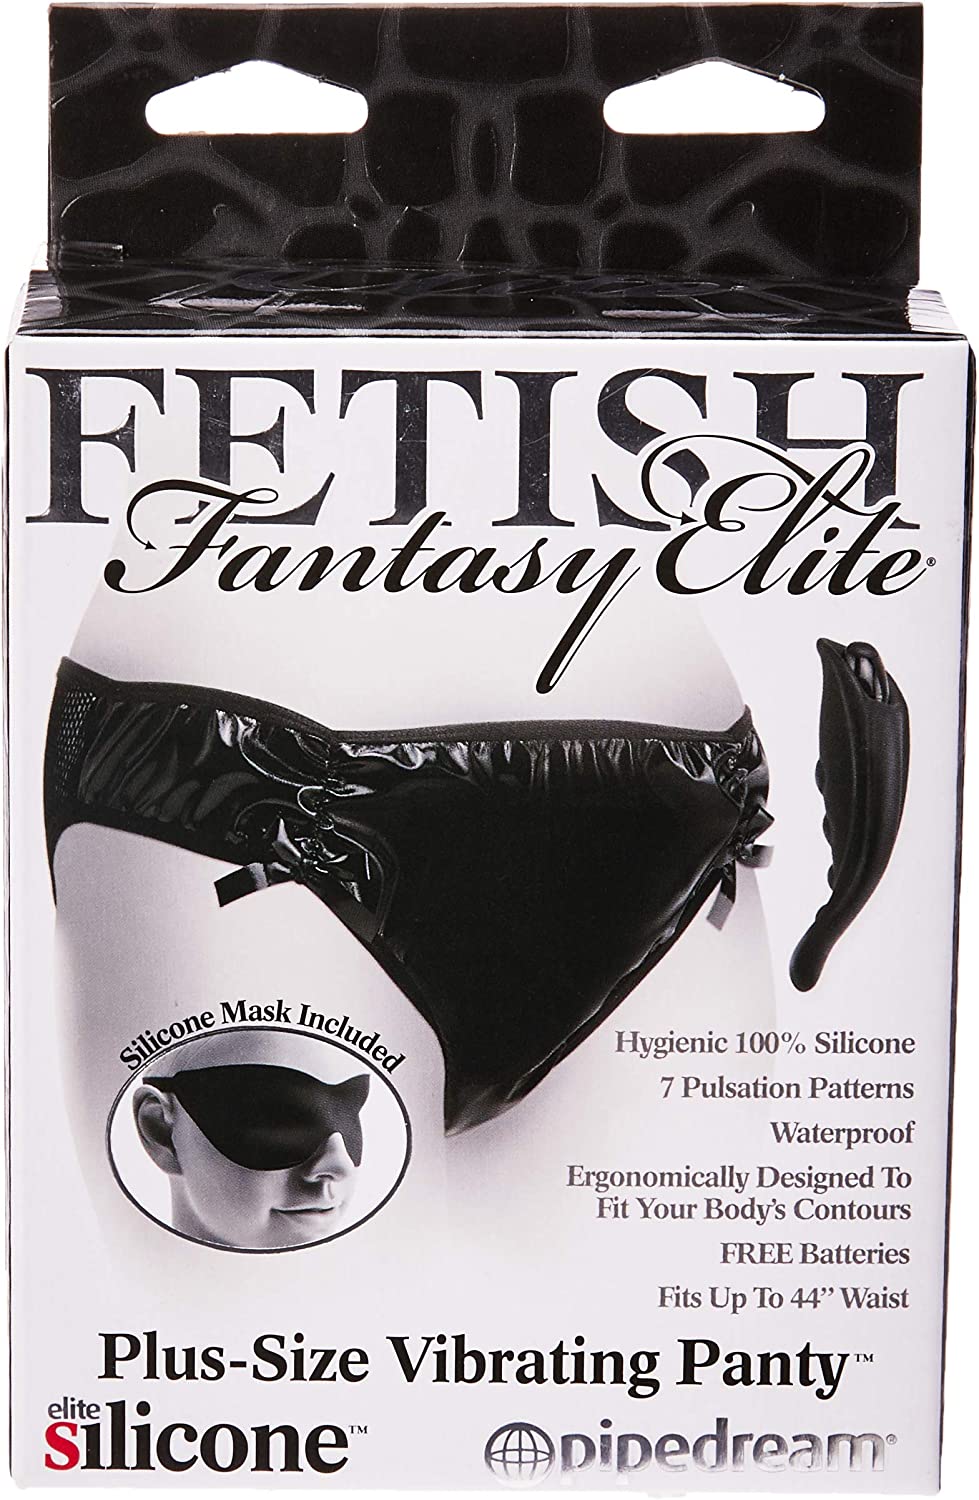 Vibrating Panty by Fetish Fantasy PLUS SIZE